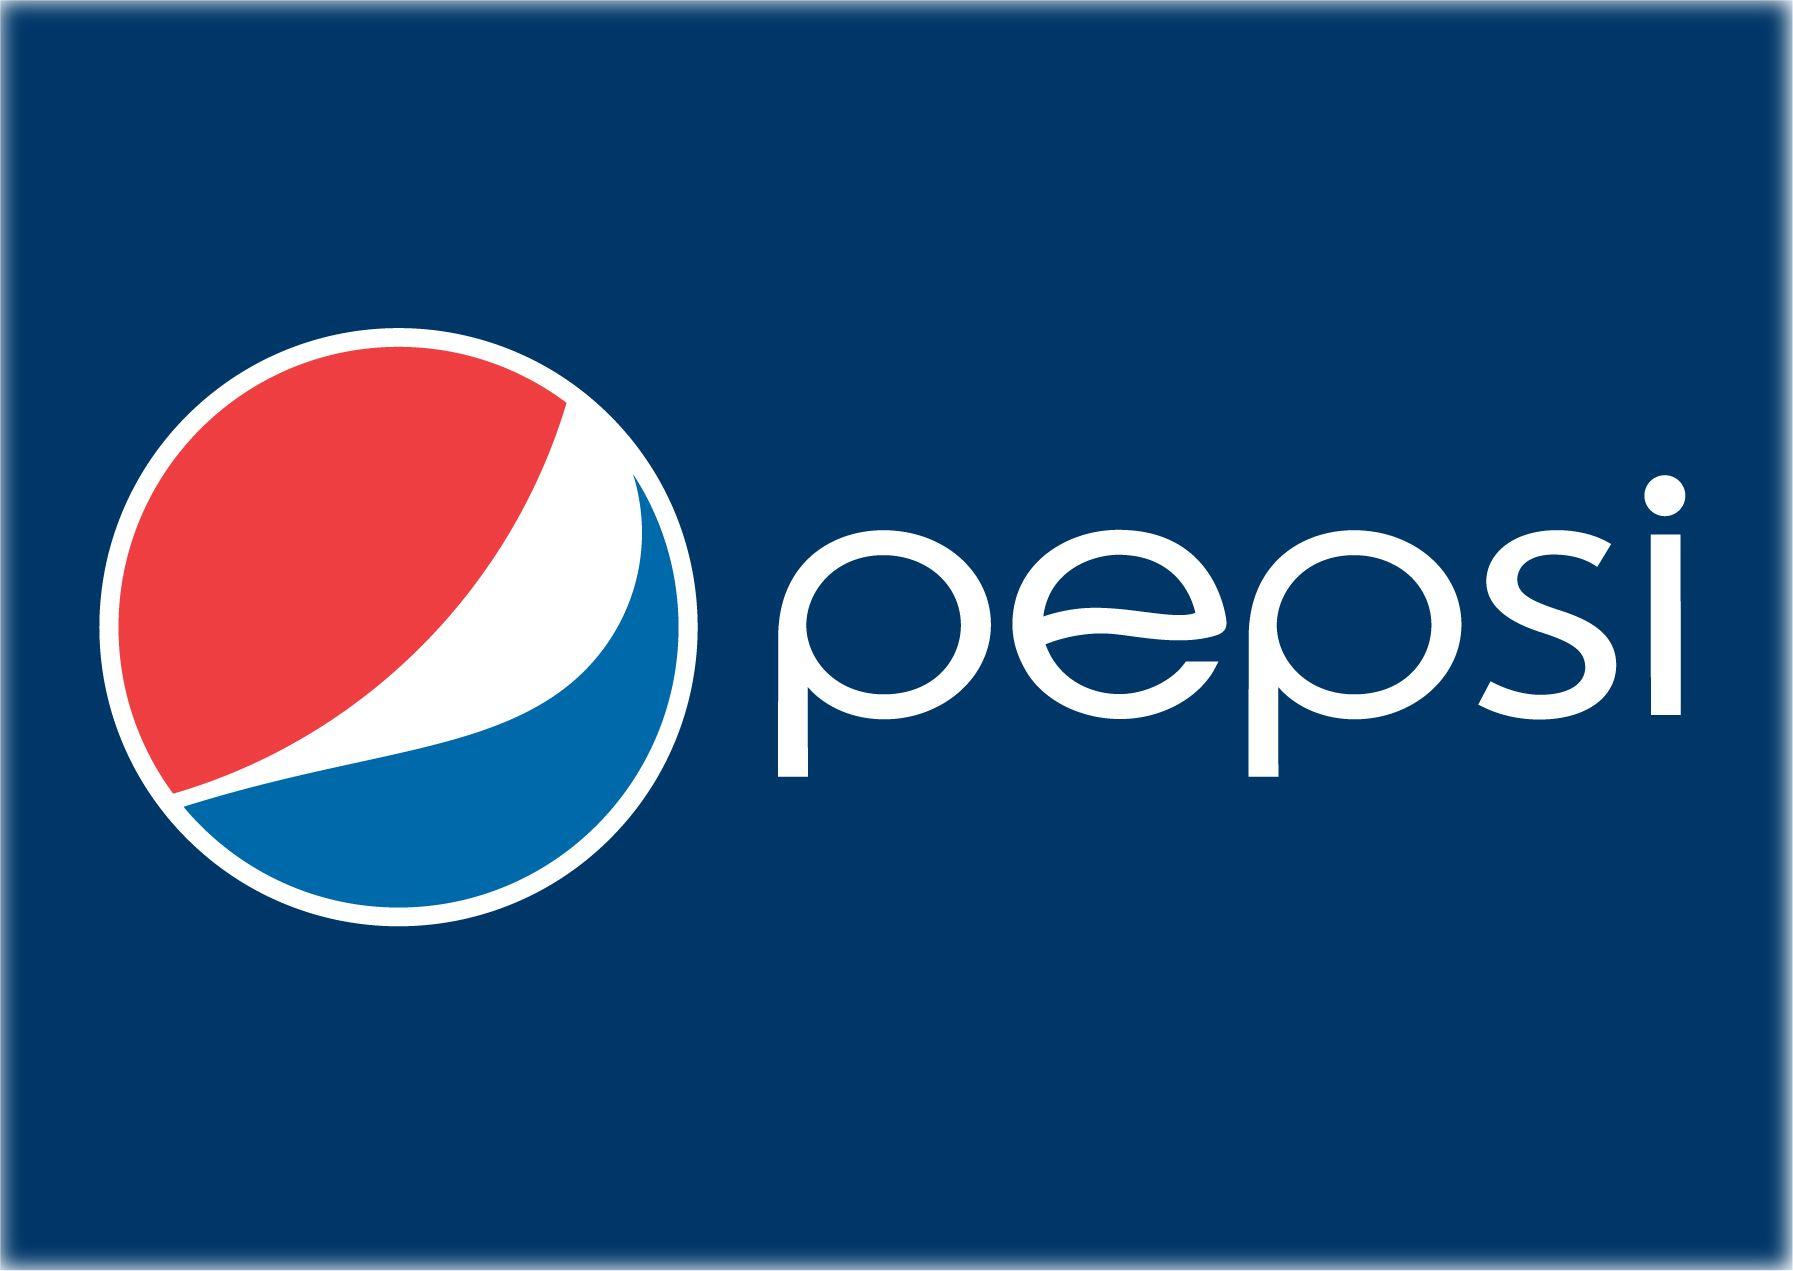 Pepsi logo HD Wallpaper